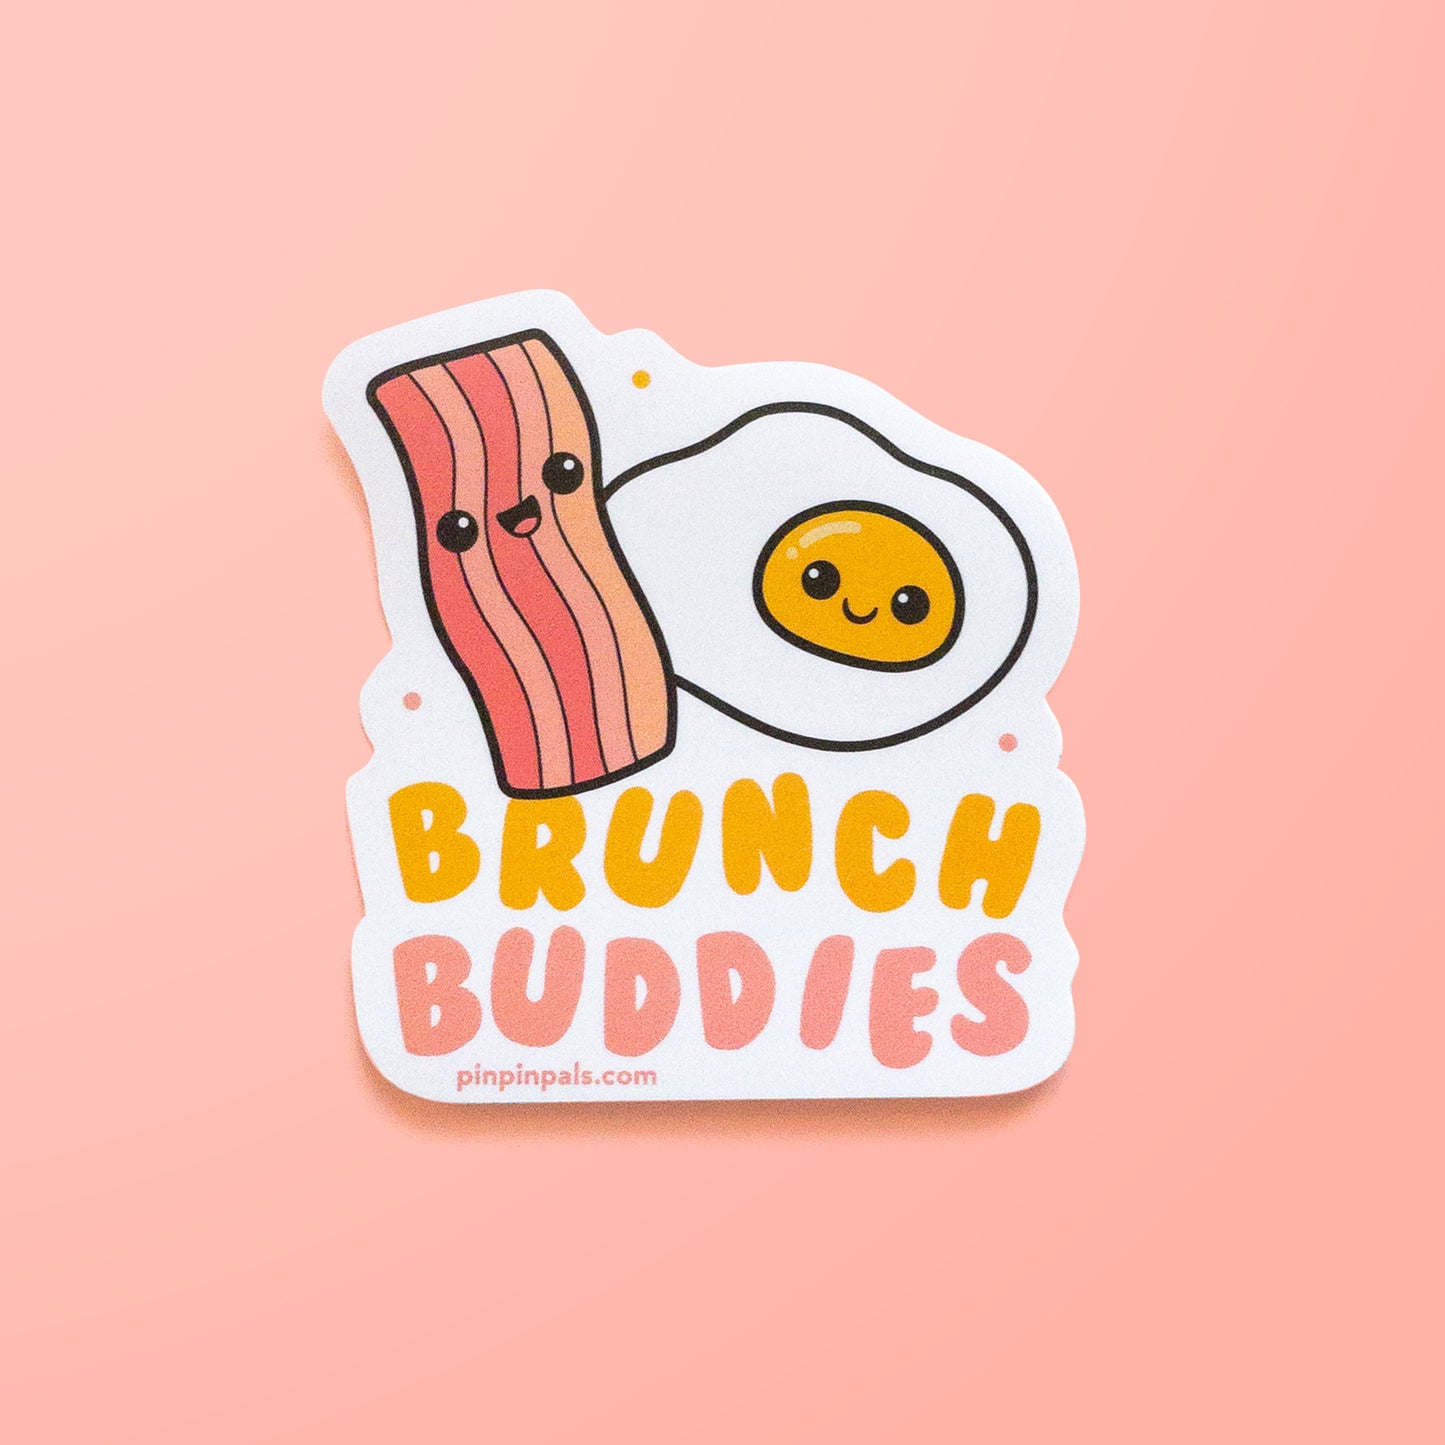 Brunch buddies - egg and bacon vinyl sticker on pink background